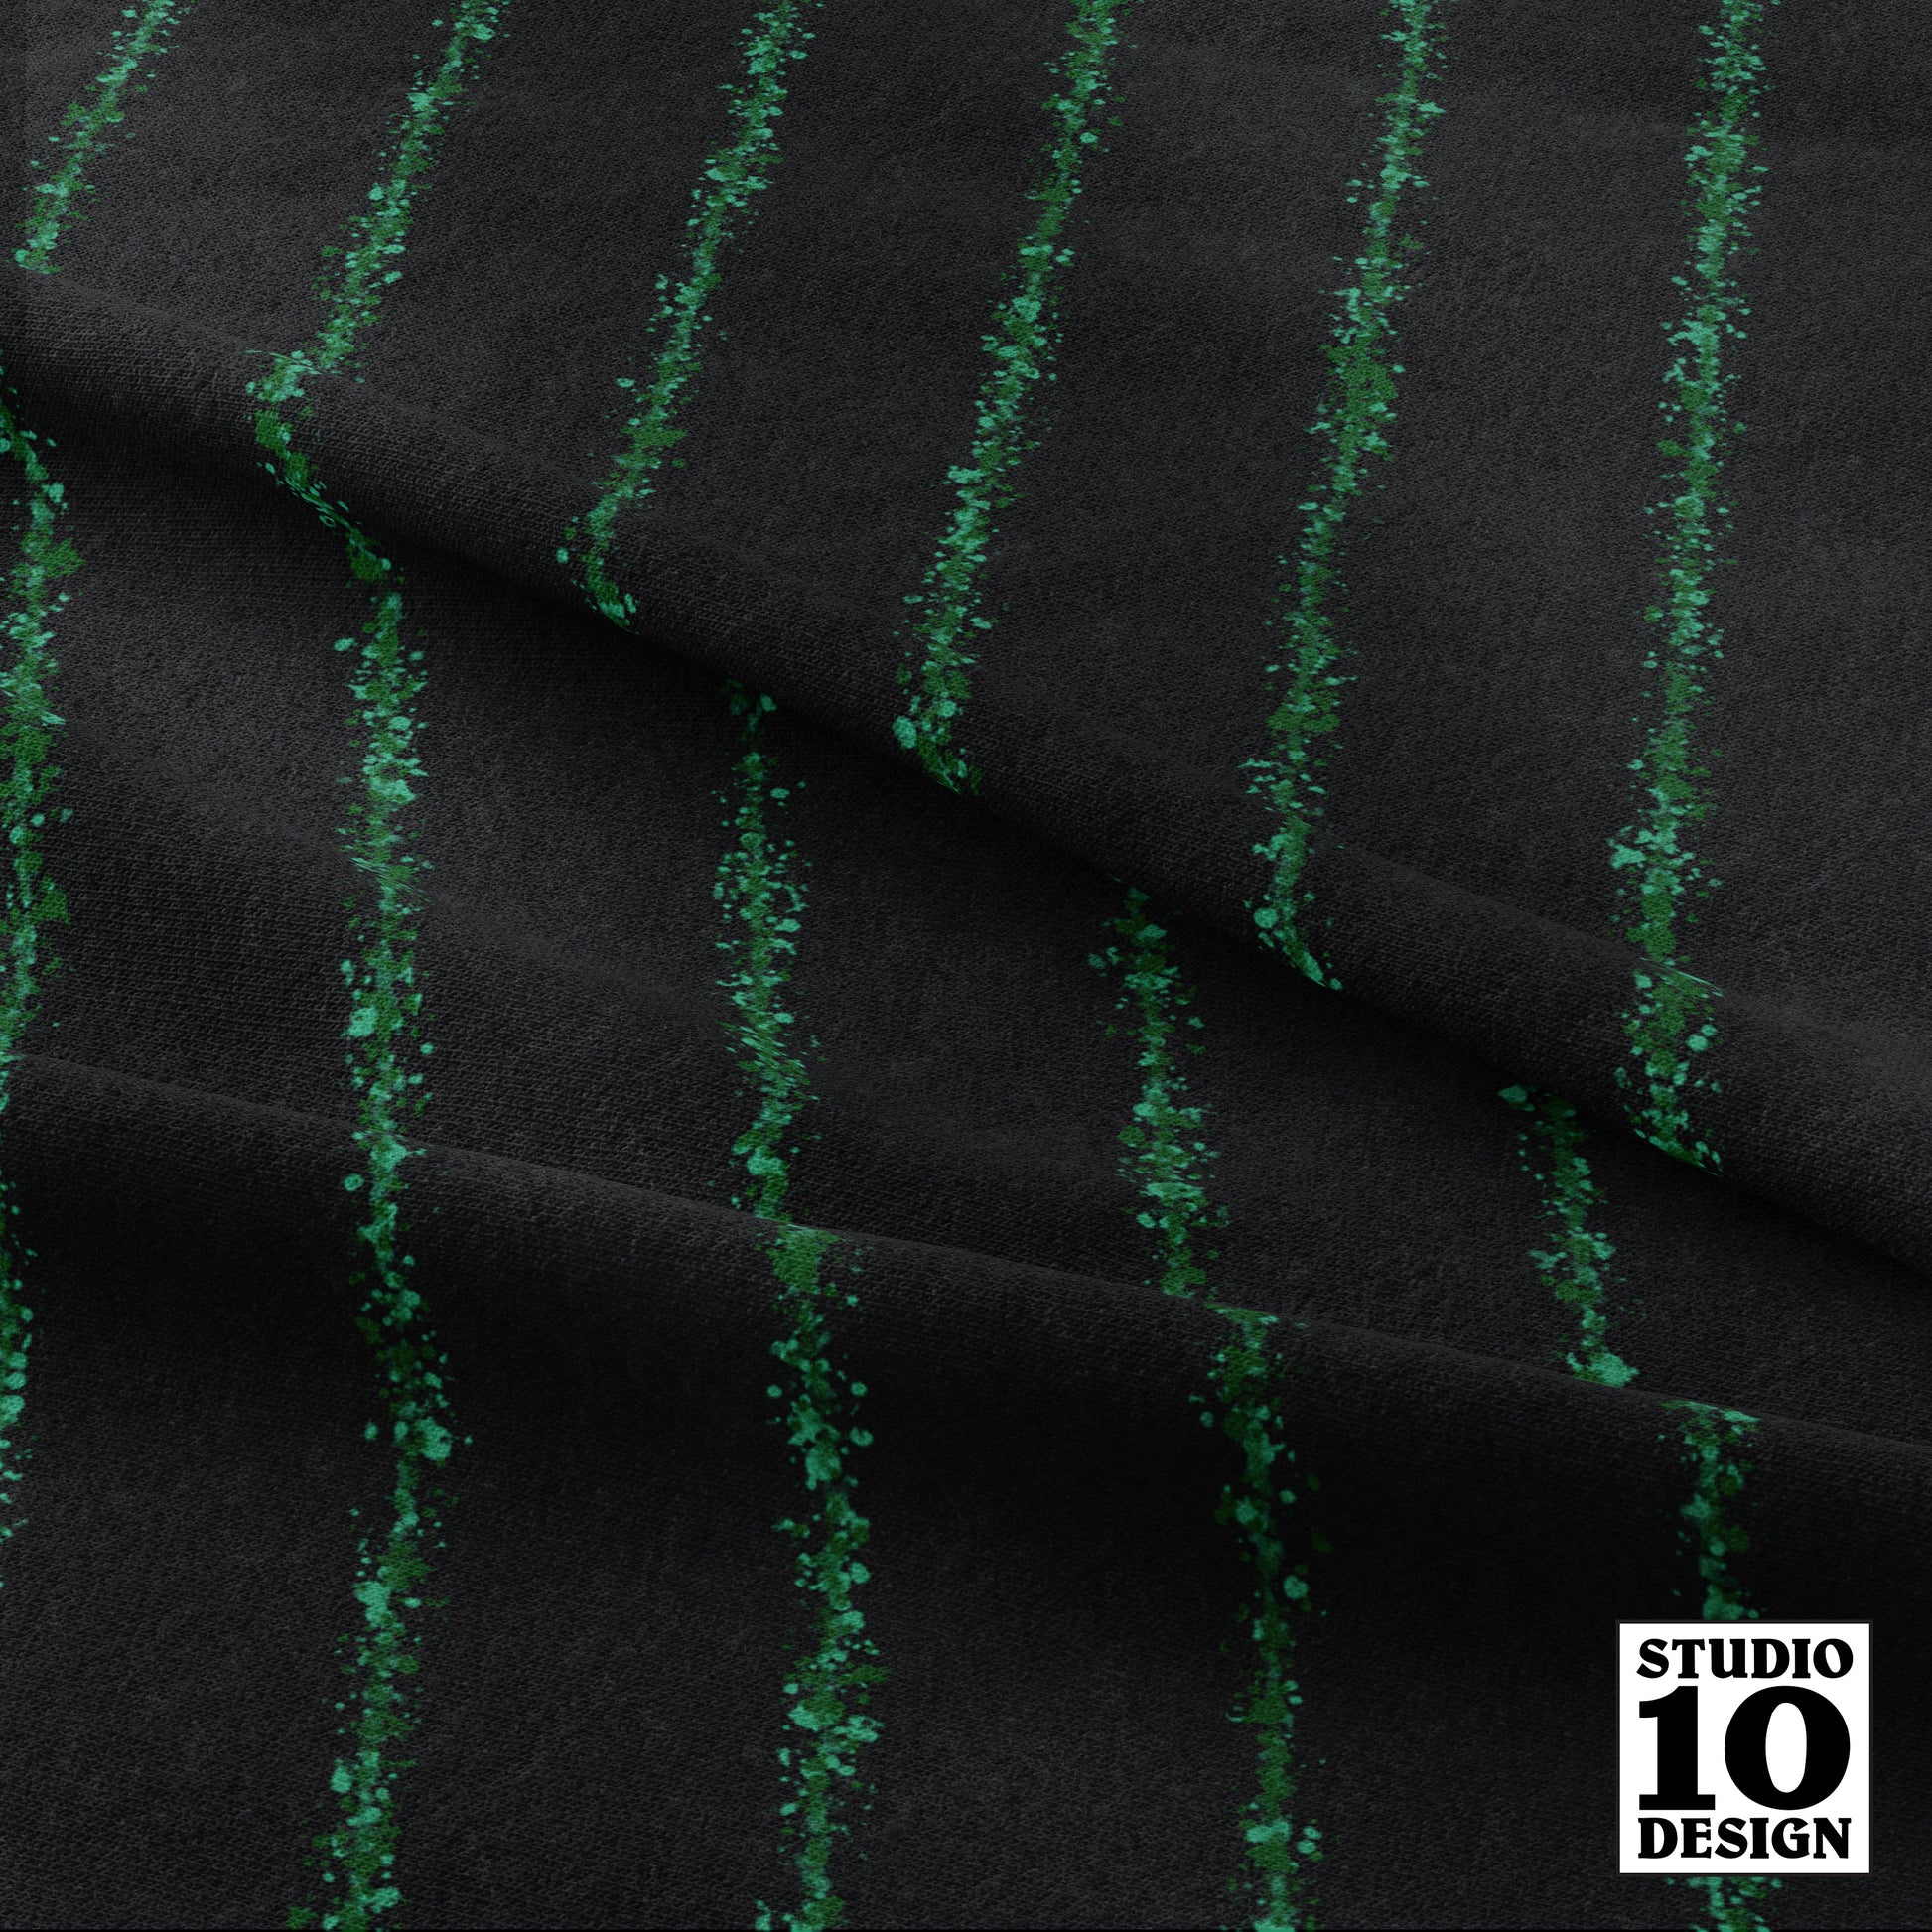 Splatter Pinstripe Green + Black Printed Fabric by Studio Ten Design